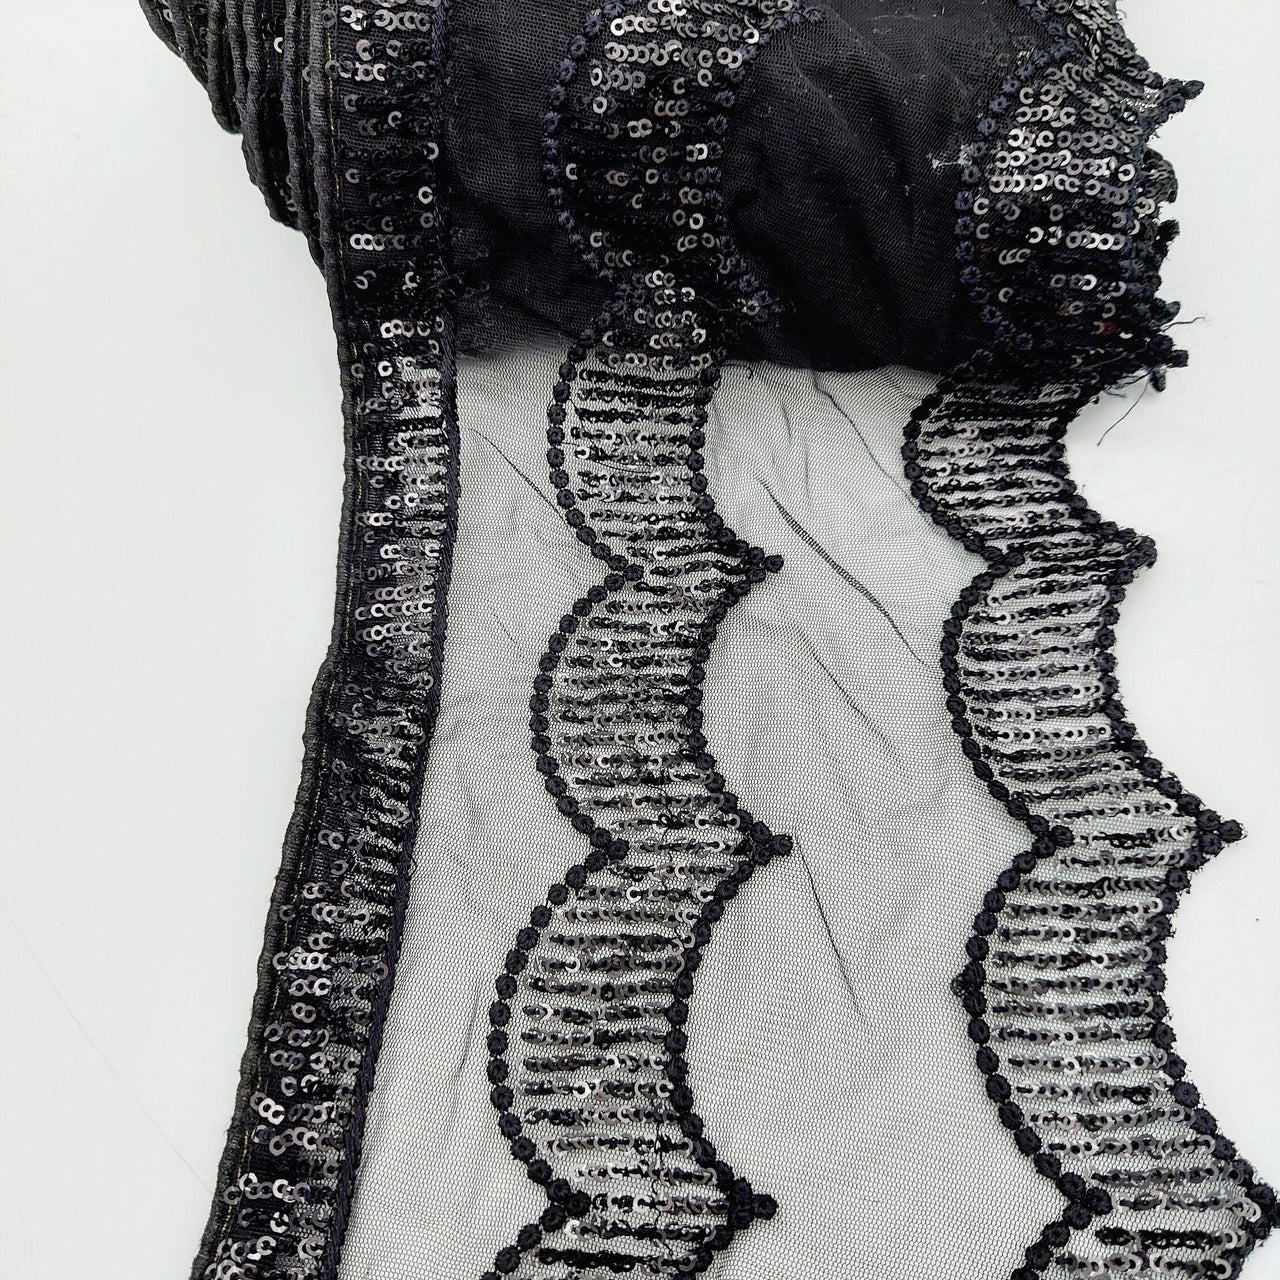 Black Net Scallop Lace Trim with Black Sequins, Sari Border, Embroidered Trim